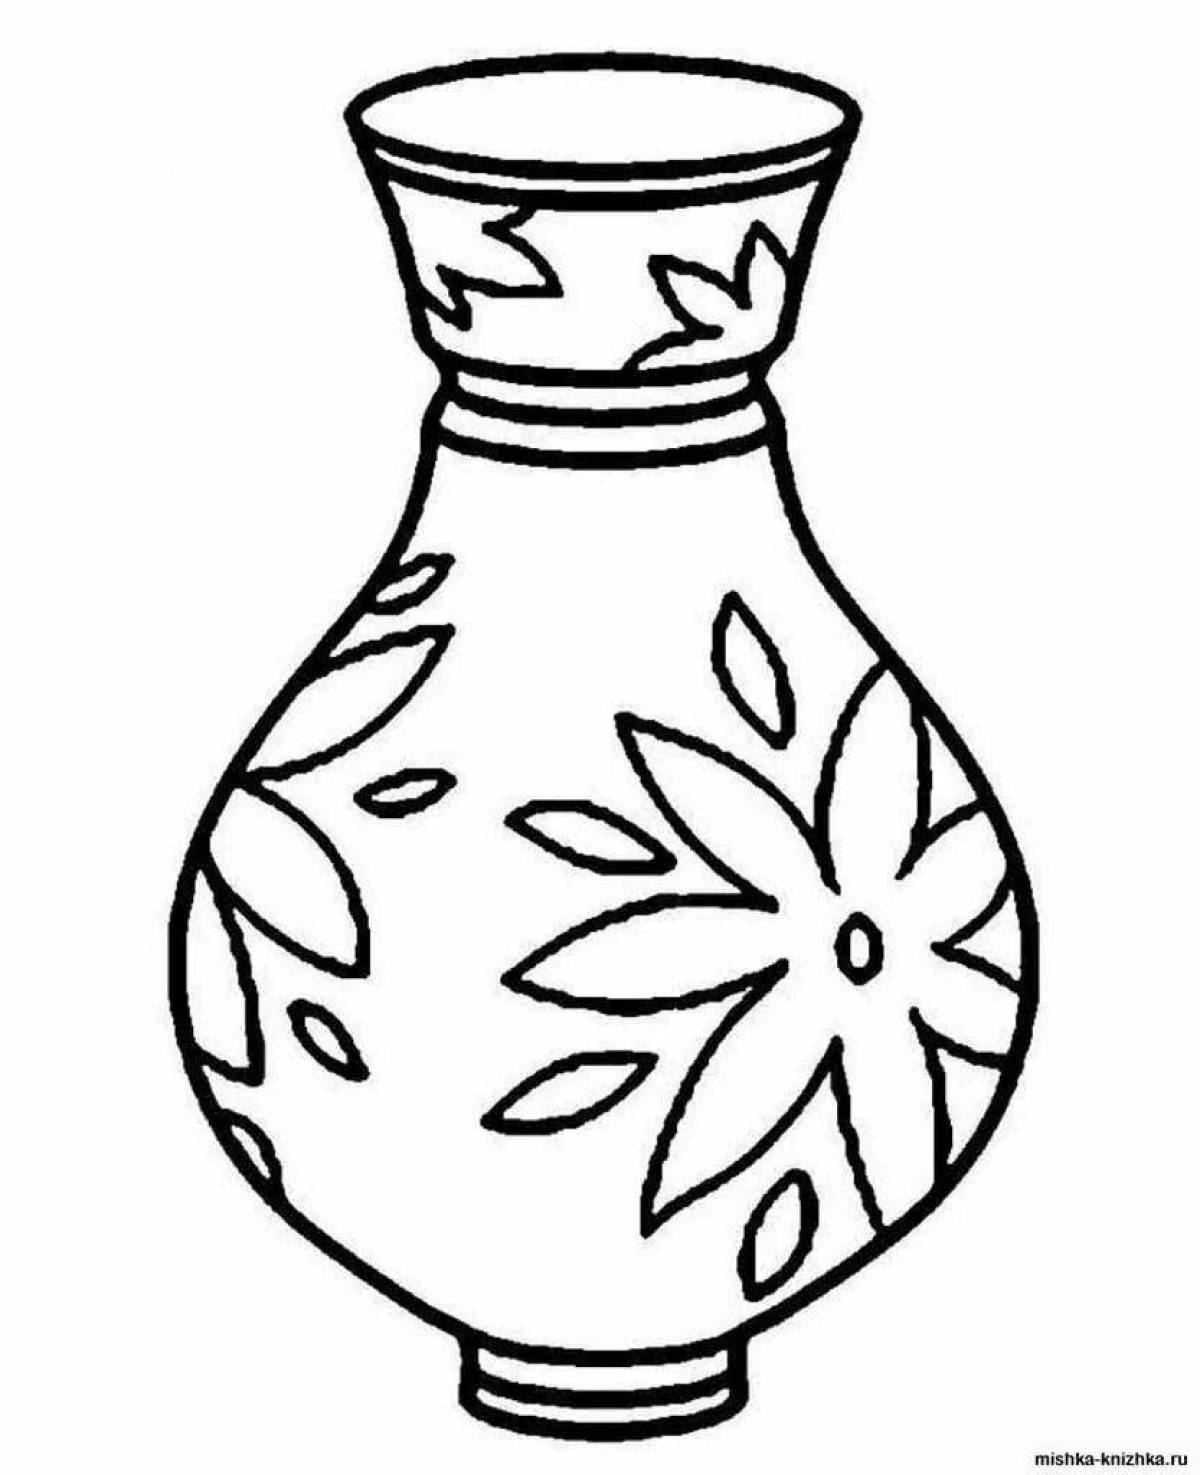 Flower vase for children's tasteful coloring